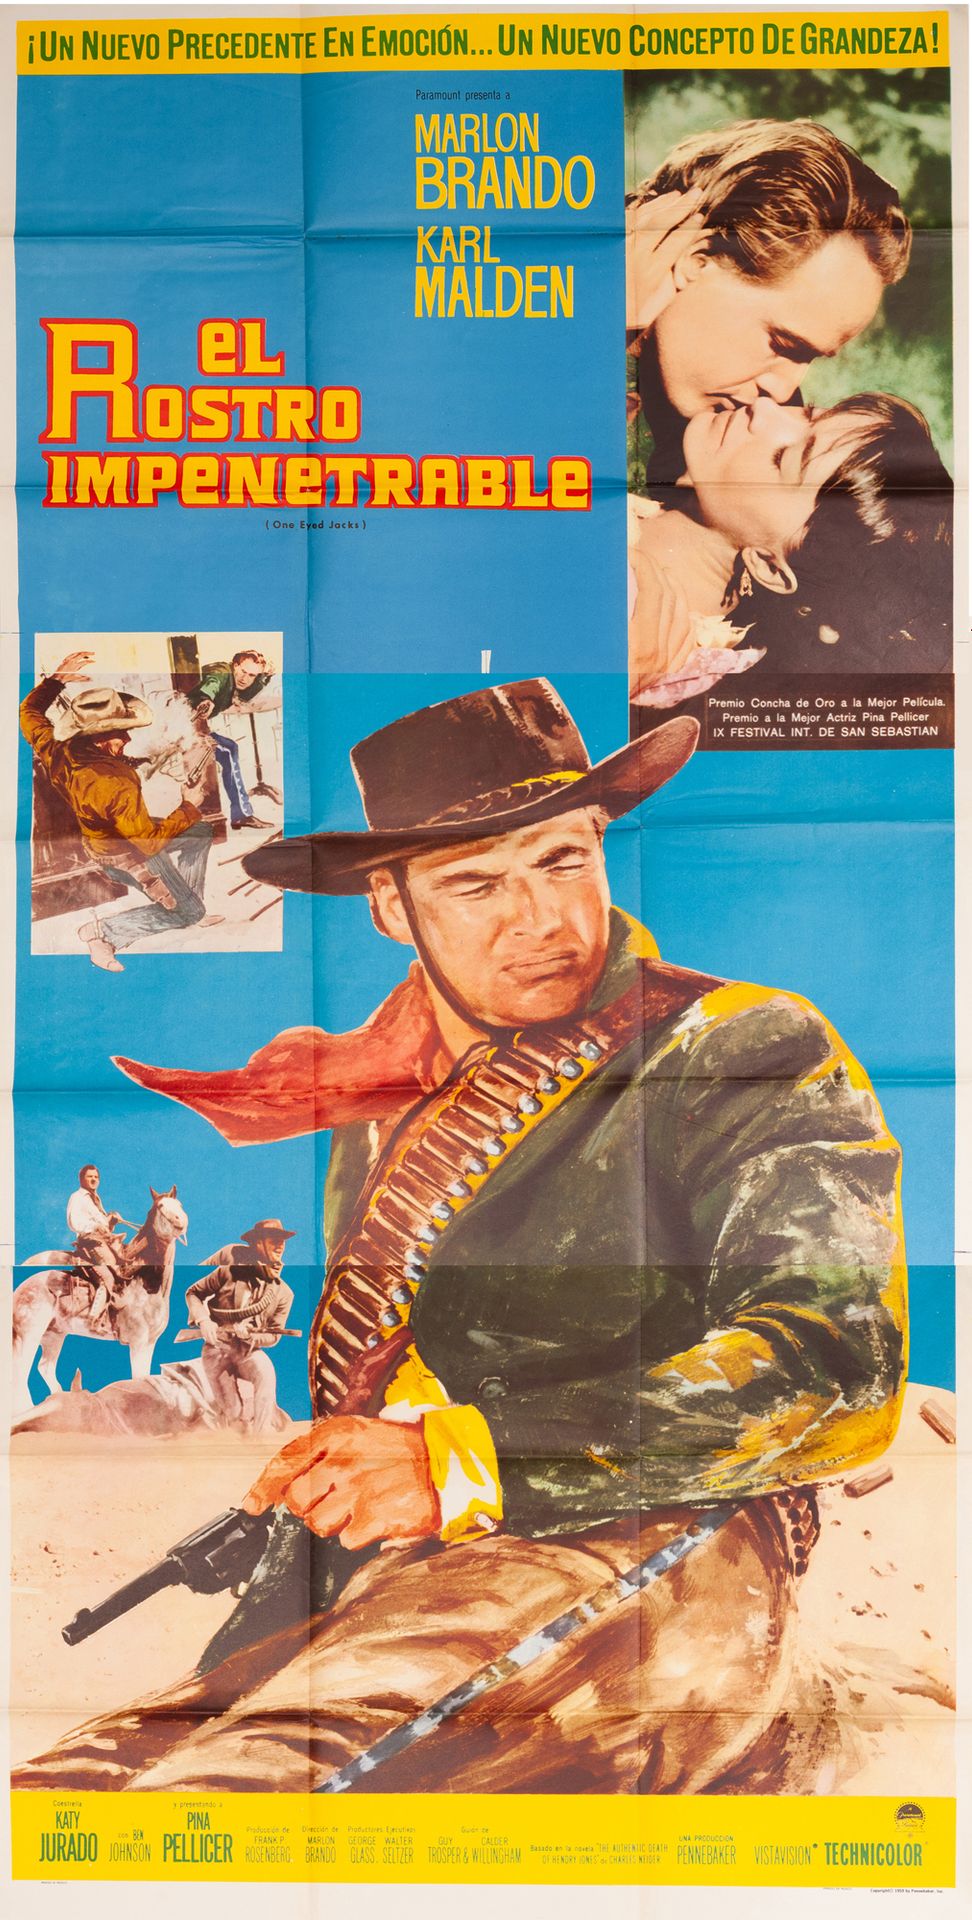 Null EL ROSTRO INPENETRABLA /
ONE-EYED JACKS Marlon Brando. 1961.
95 x 190 cm. P&hellip;